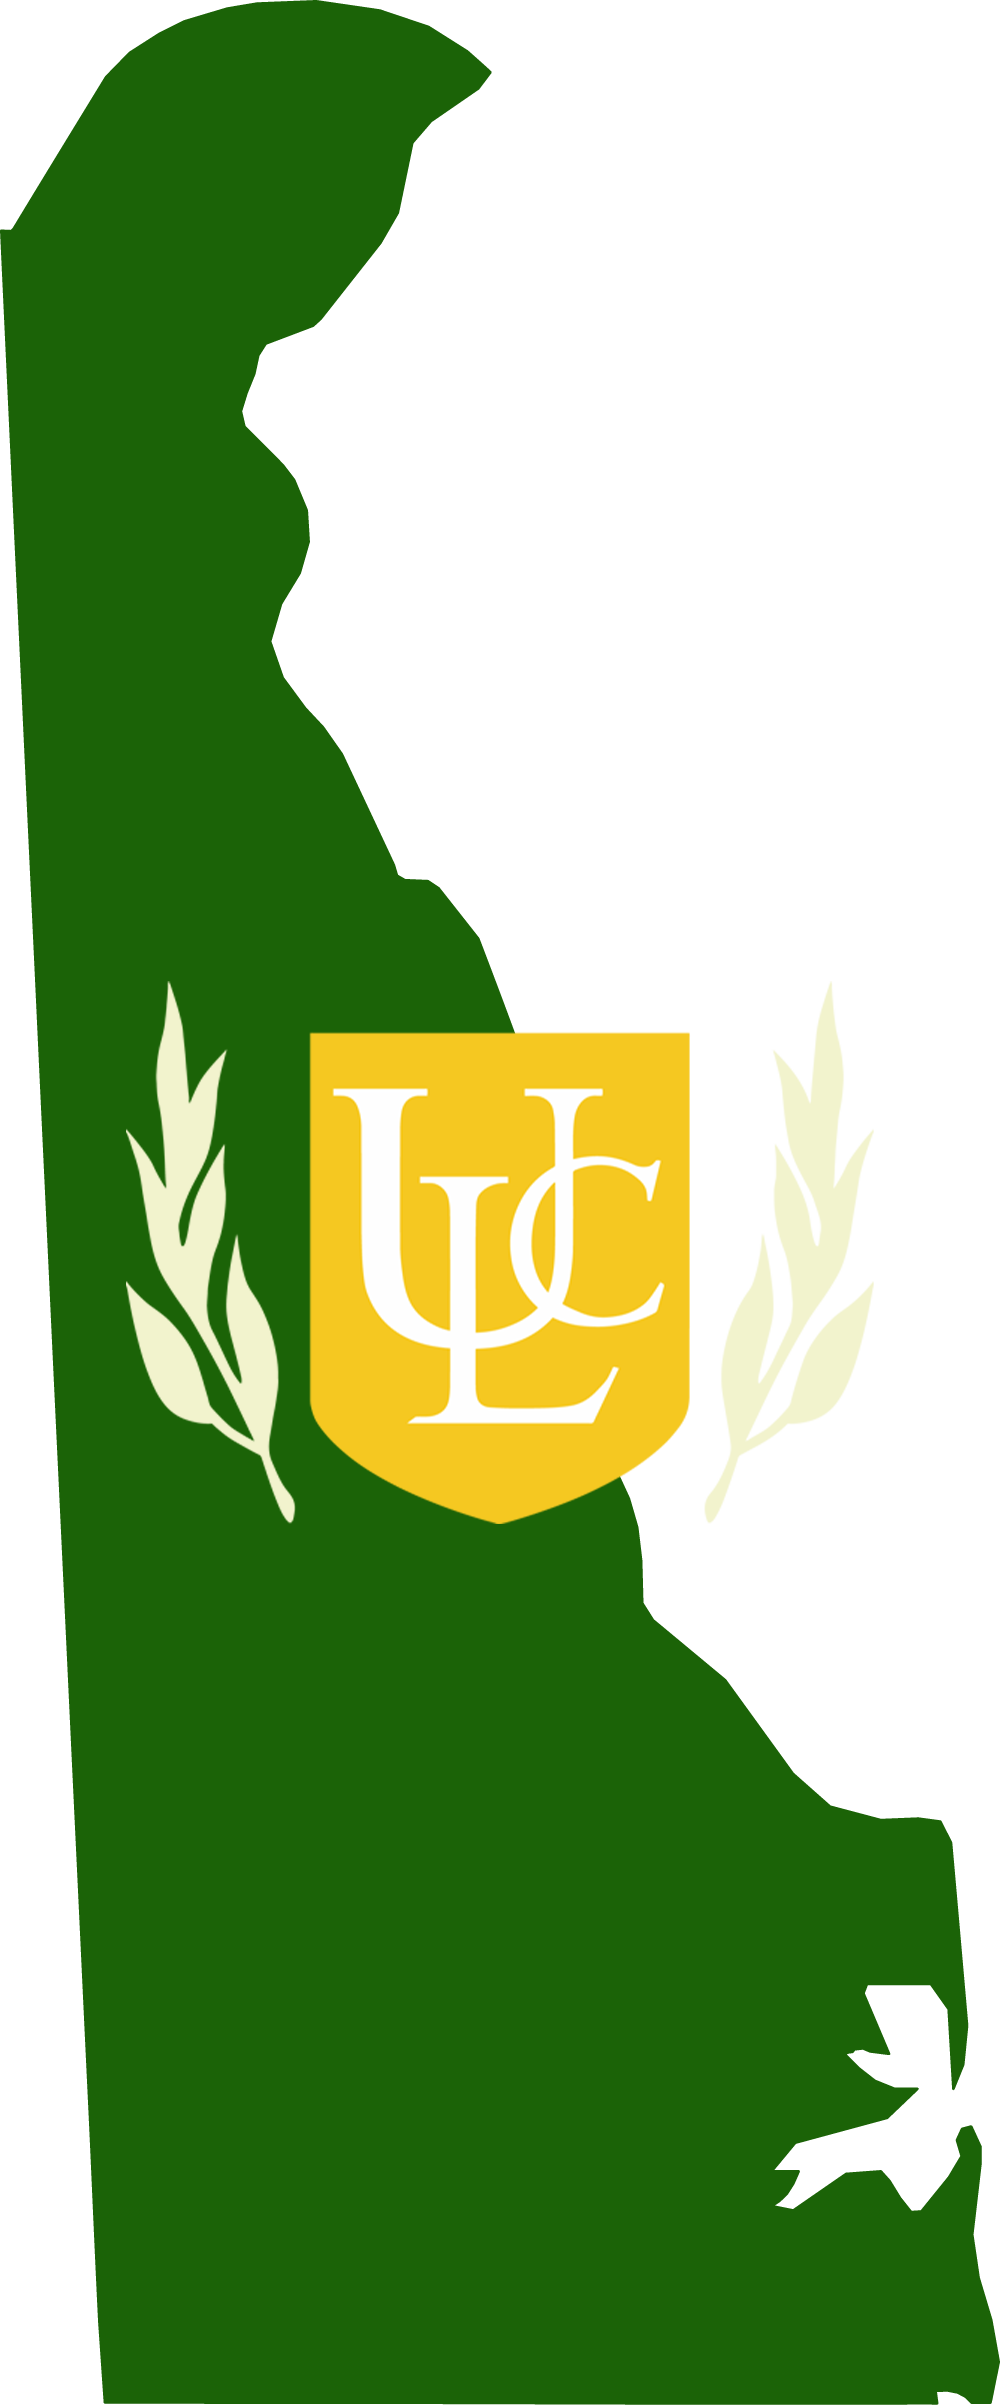 An outline of DE with the ULC logo